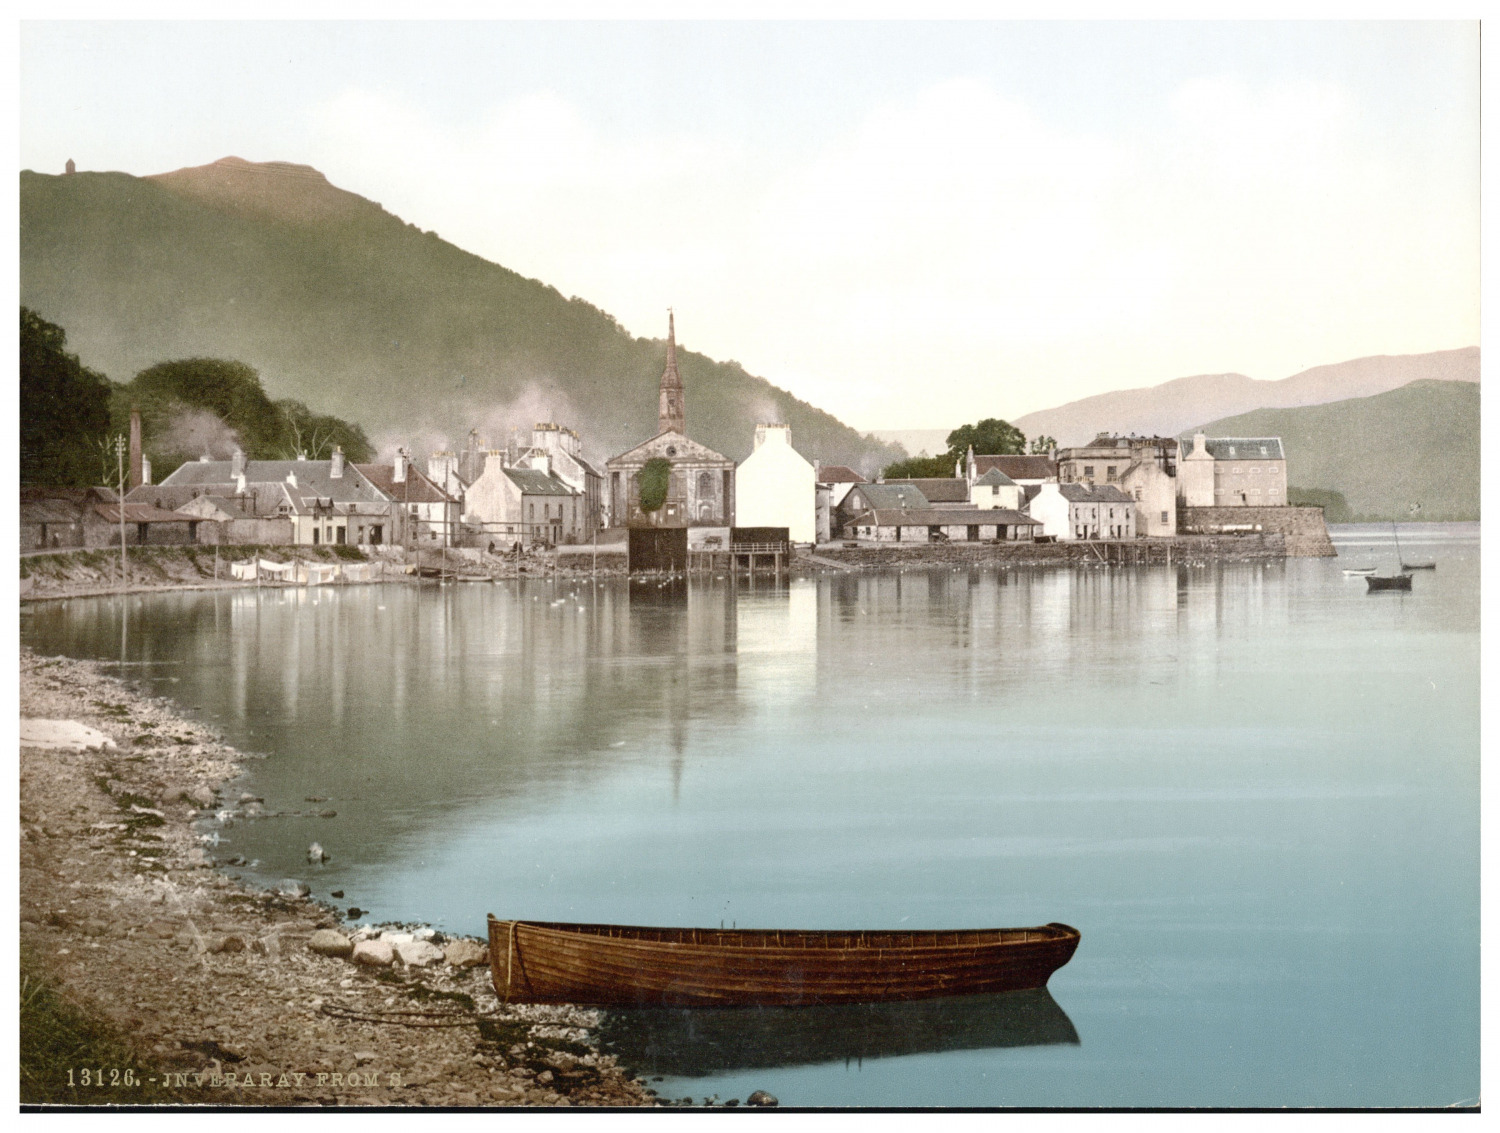 England, Argyle, Inveraray from S. Vintage Photochrome, Photochromy, Vintage